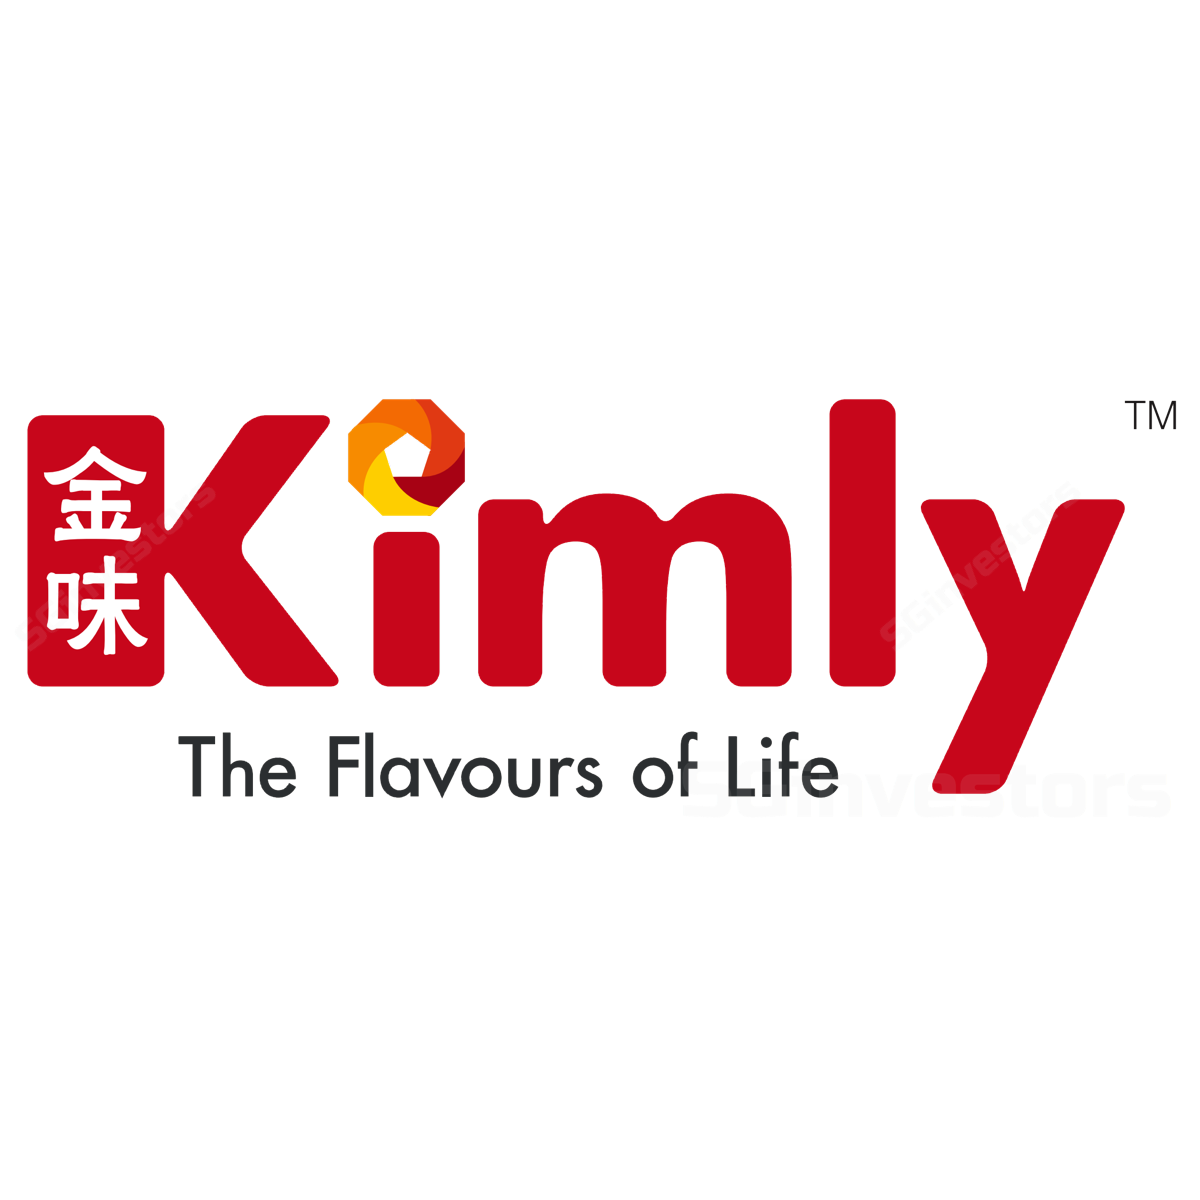 KIMLY LTD (KMLY SP) - UOB Kay Hian 2017-05-17: A Cash-Rich Business Awaiting The Next Growth Driver